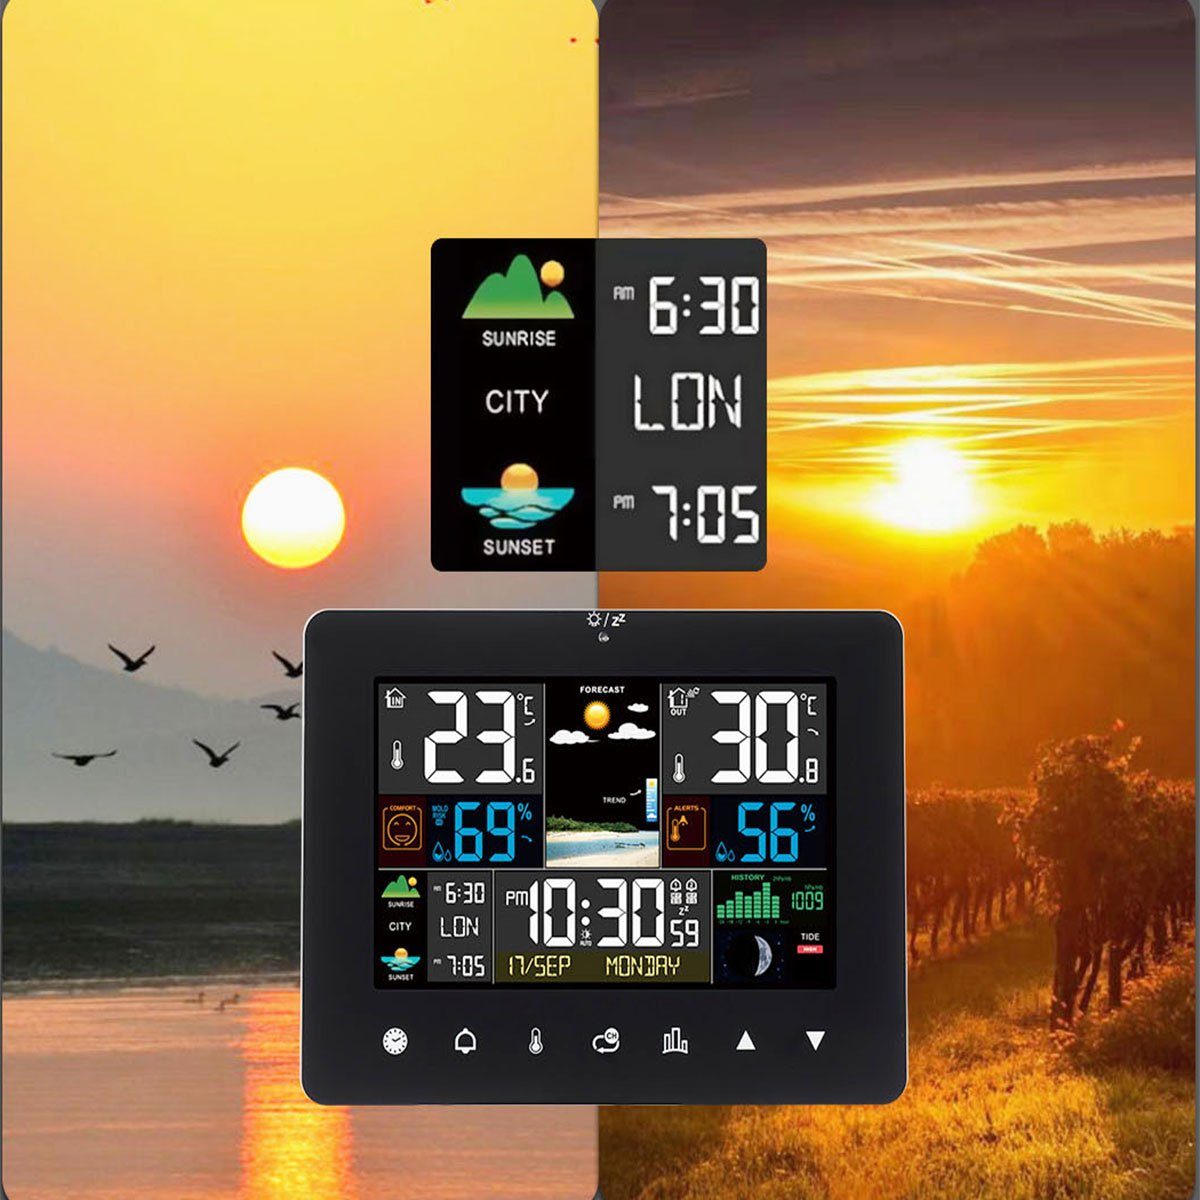 Hygrometer Wetterstation Funk-Außensensor, mit mit Thermometer oyajia Wetterstation LED Farbdisplay) Kalender (Kalender